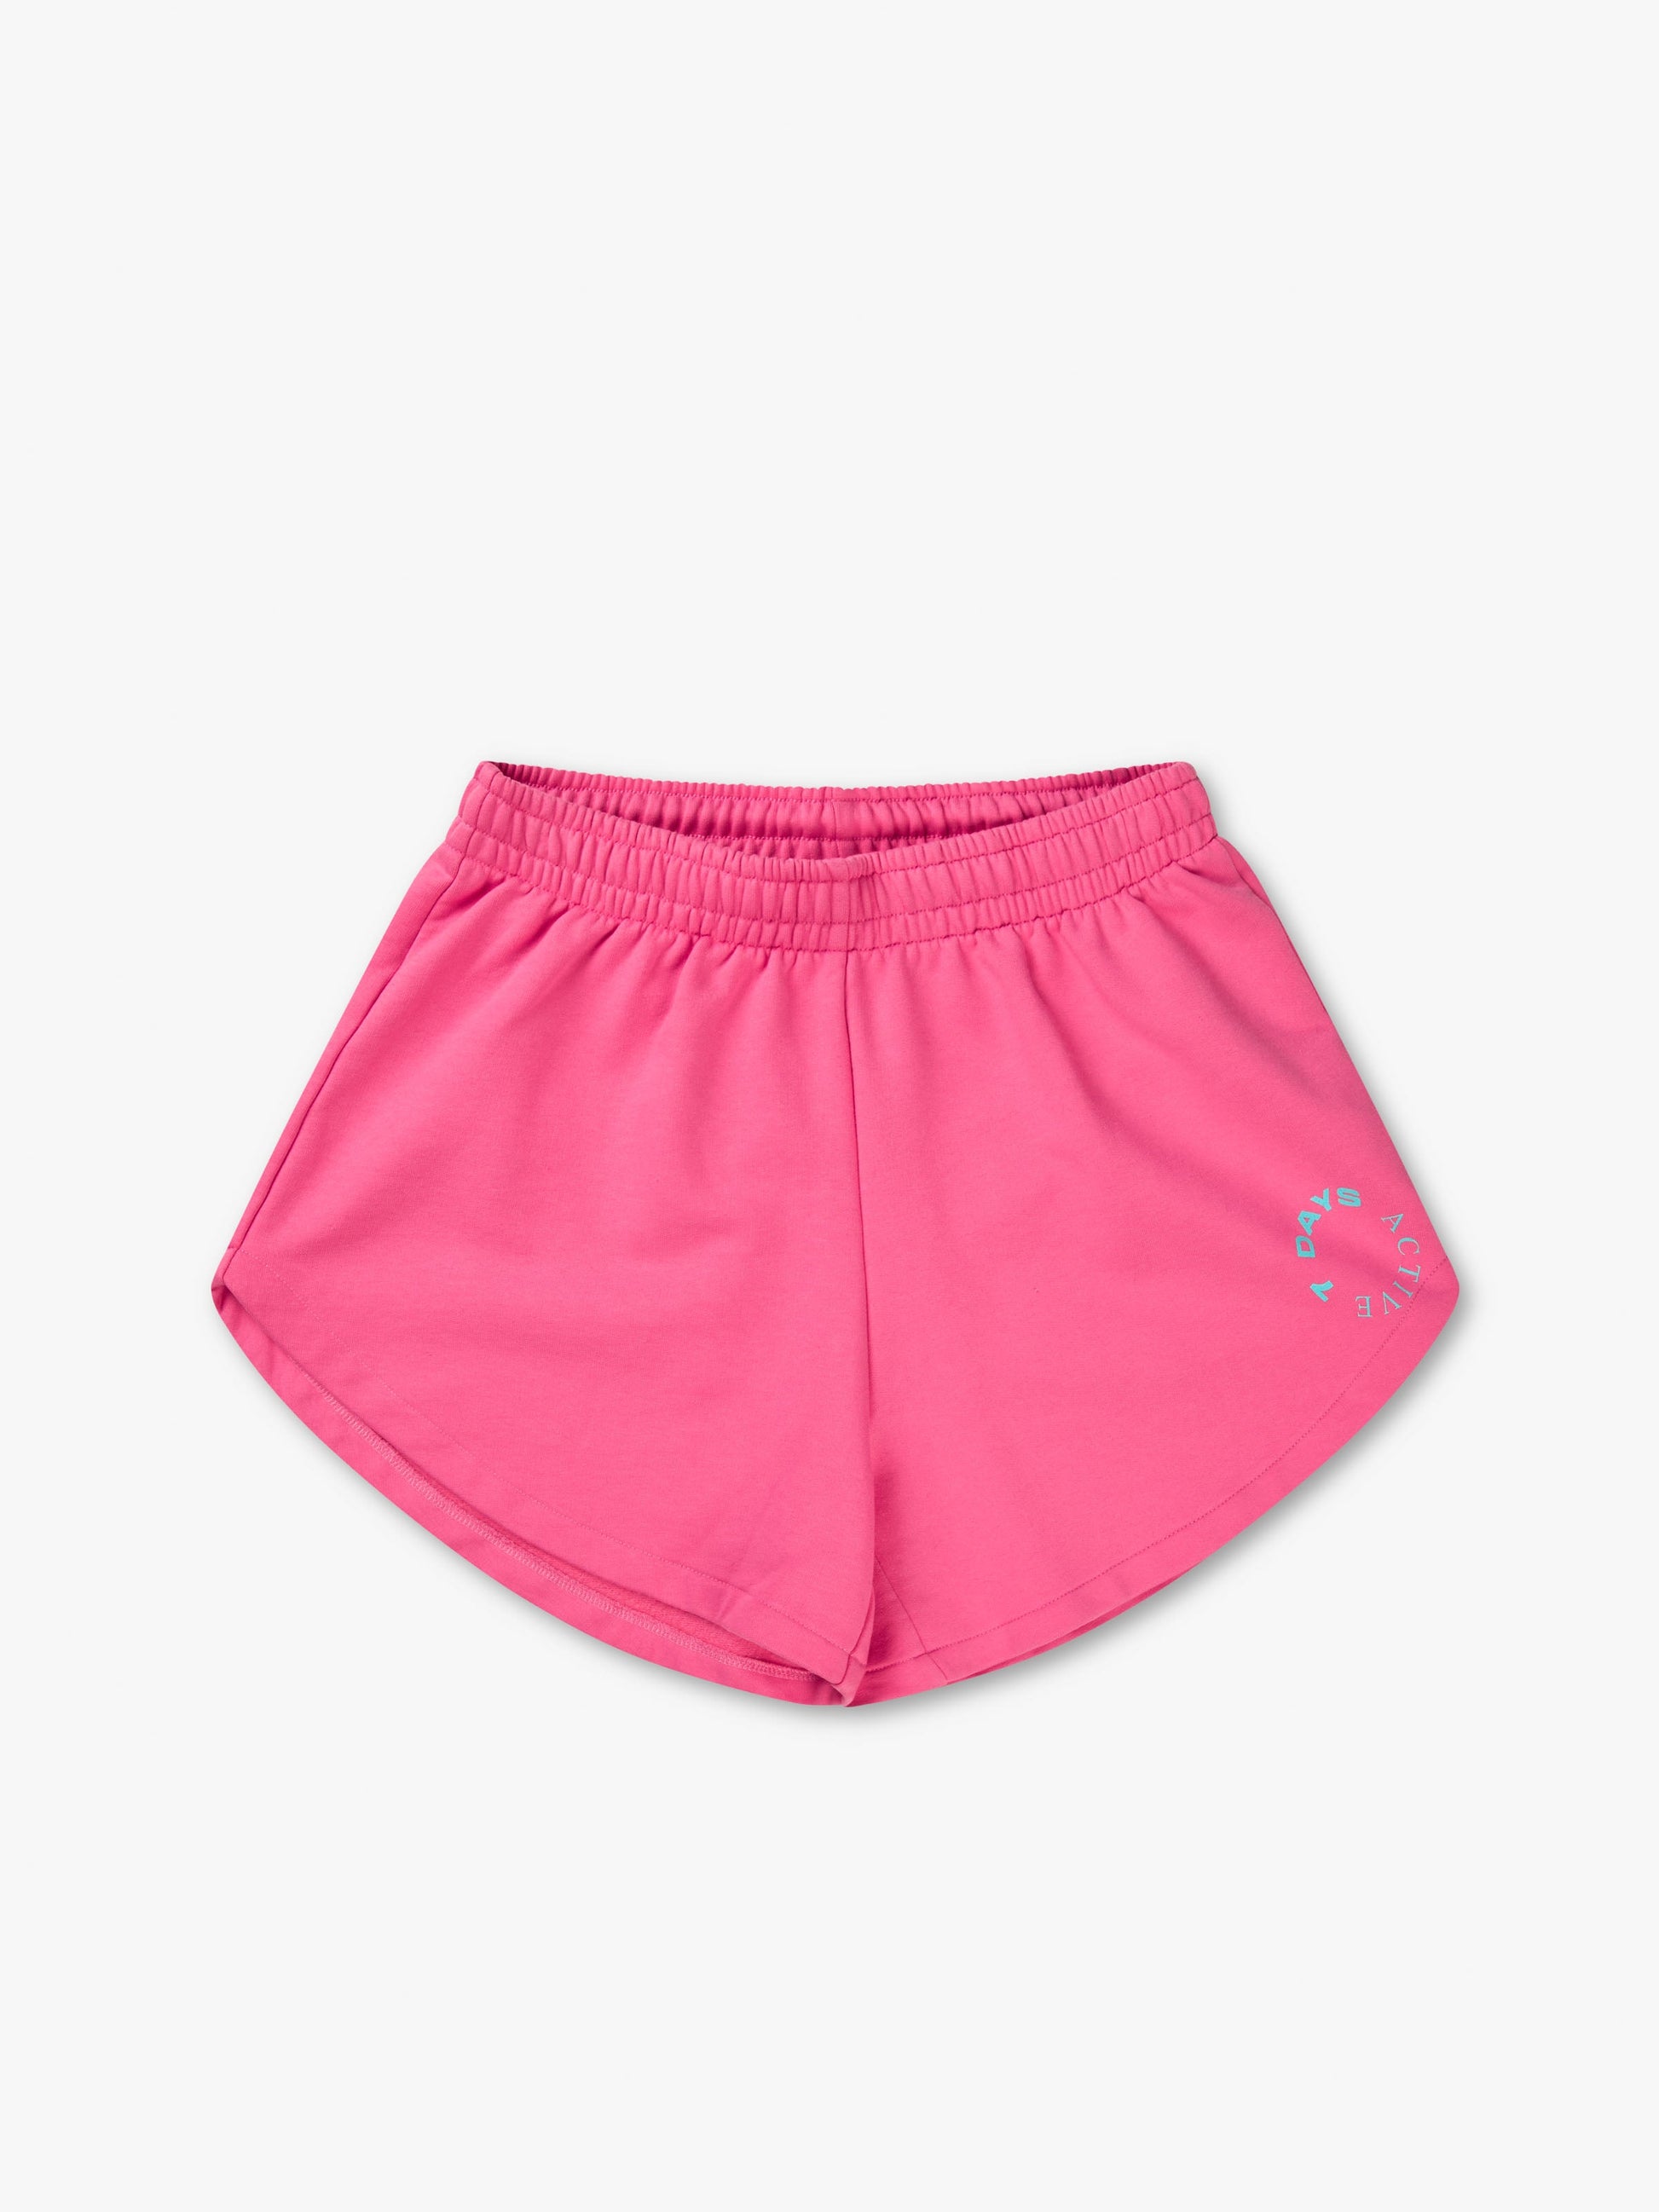 7 DAYS Organic High Waist Sweat Shorts Shorts 149 Fandango Pink